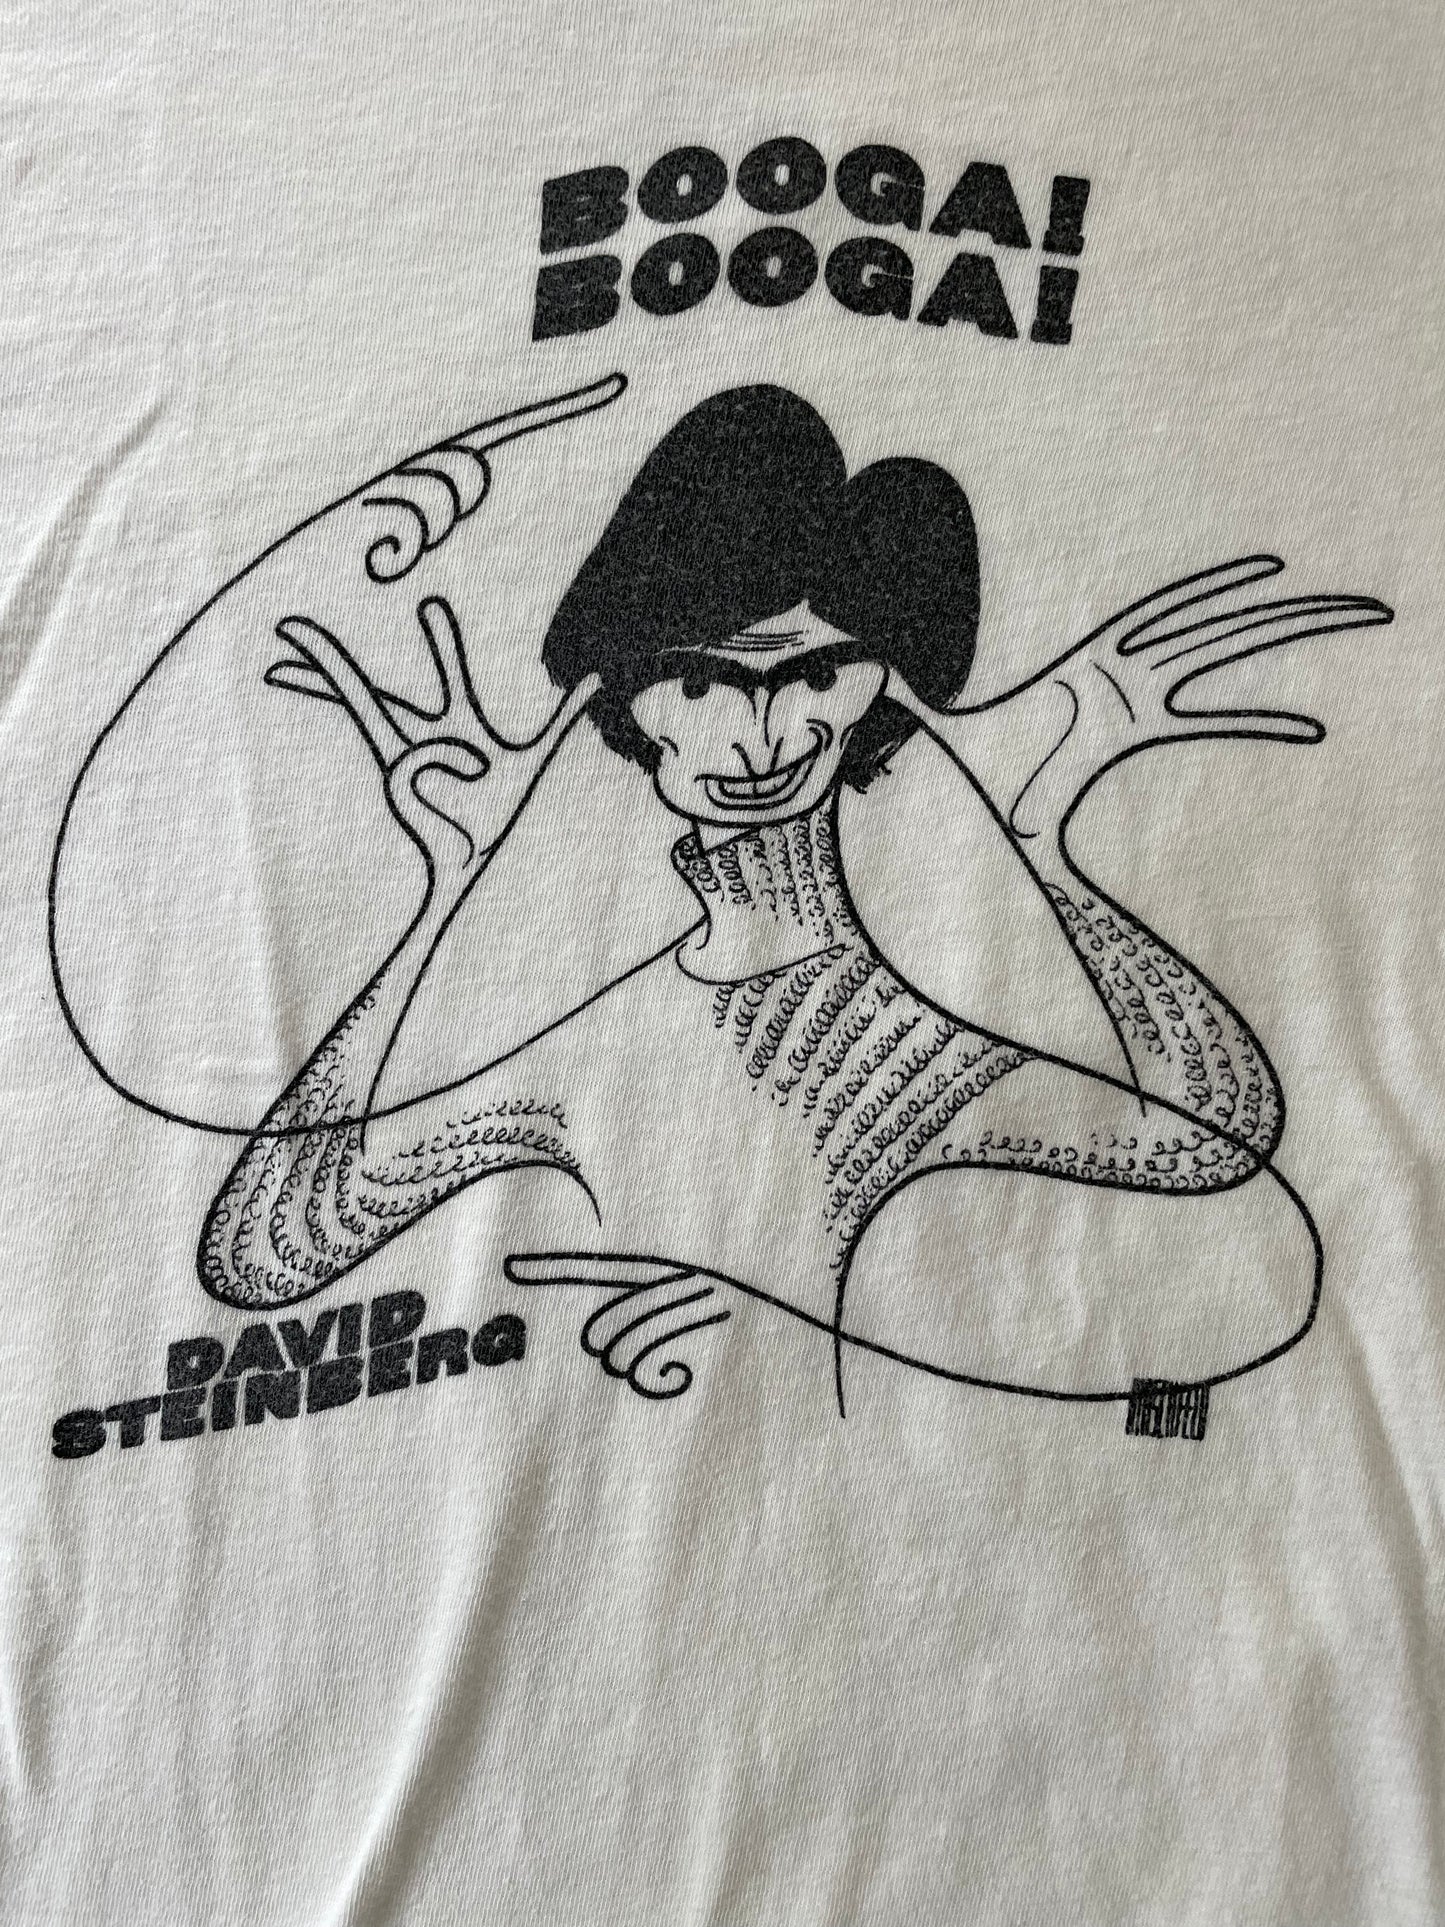 70s David Steinberg “Booga! Booga!” Ringer Tee